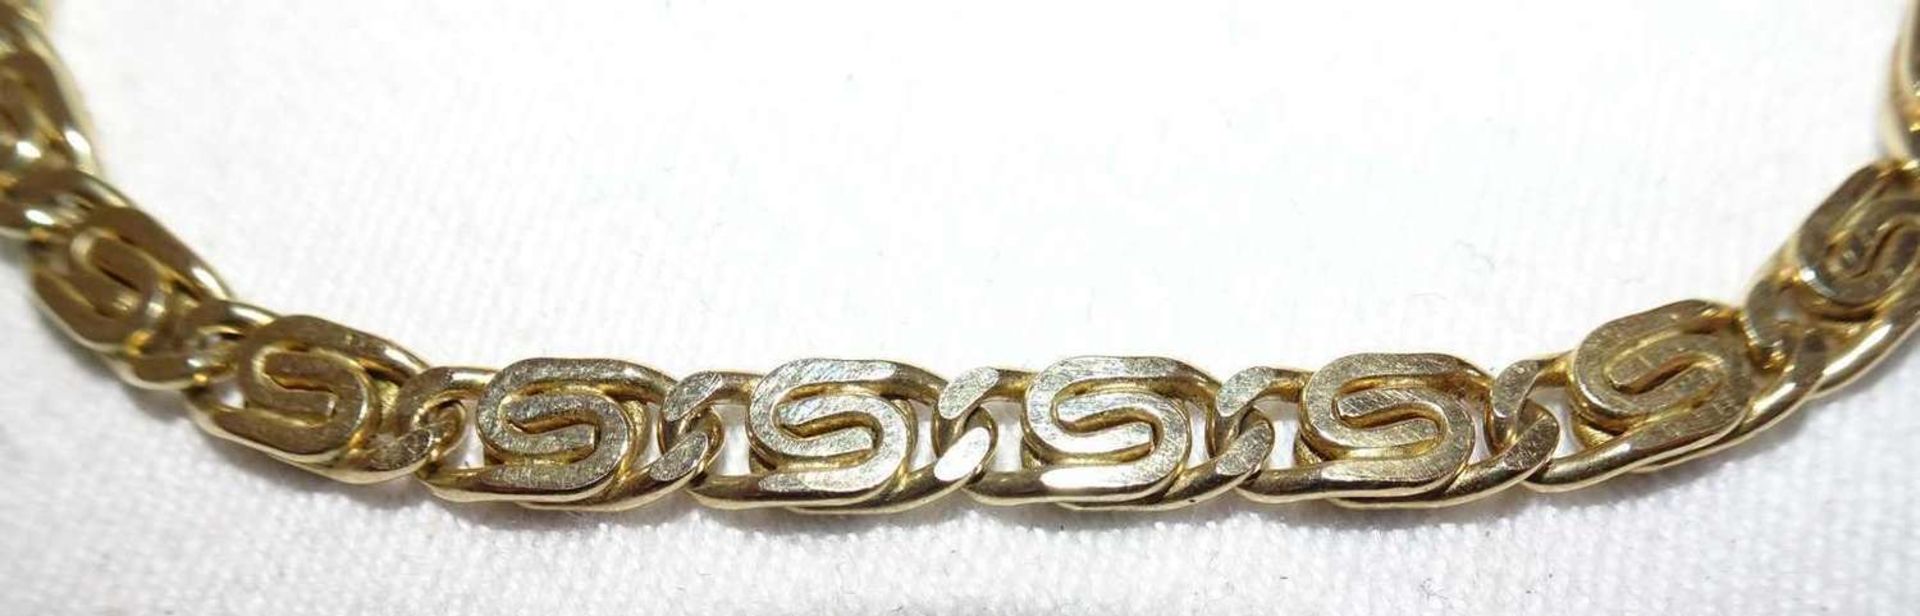 Armband, 925er Silber vergoldet. Länge ca. 19 cmBracelet, 925 silver gilt. Length approx. 19 cm - Bild 2 aus 2